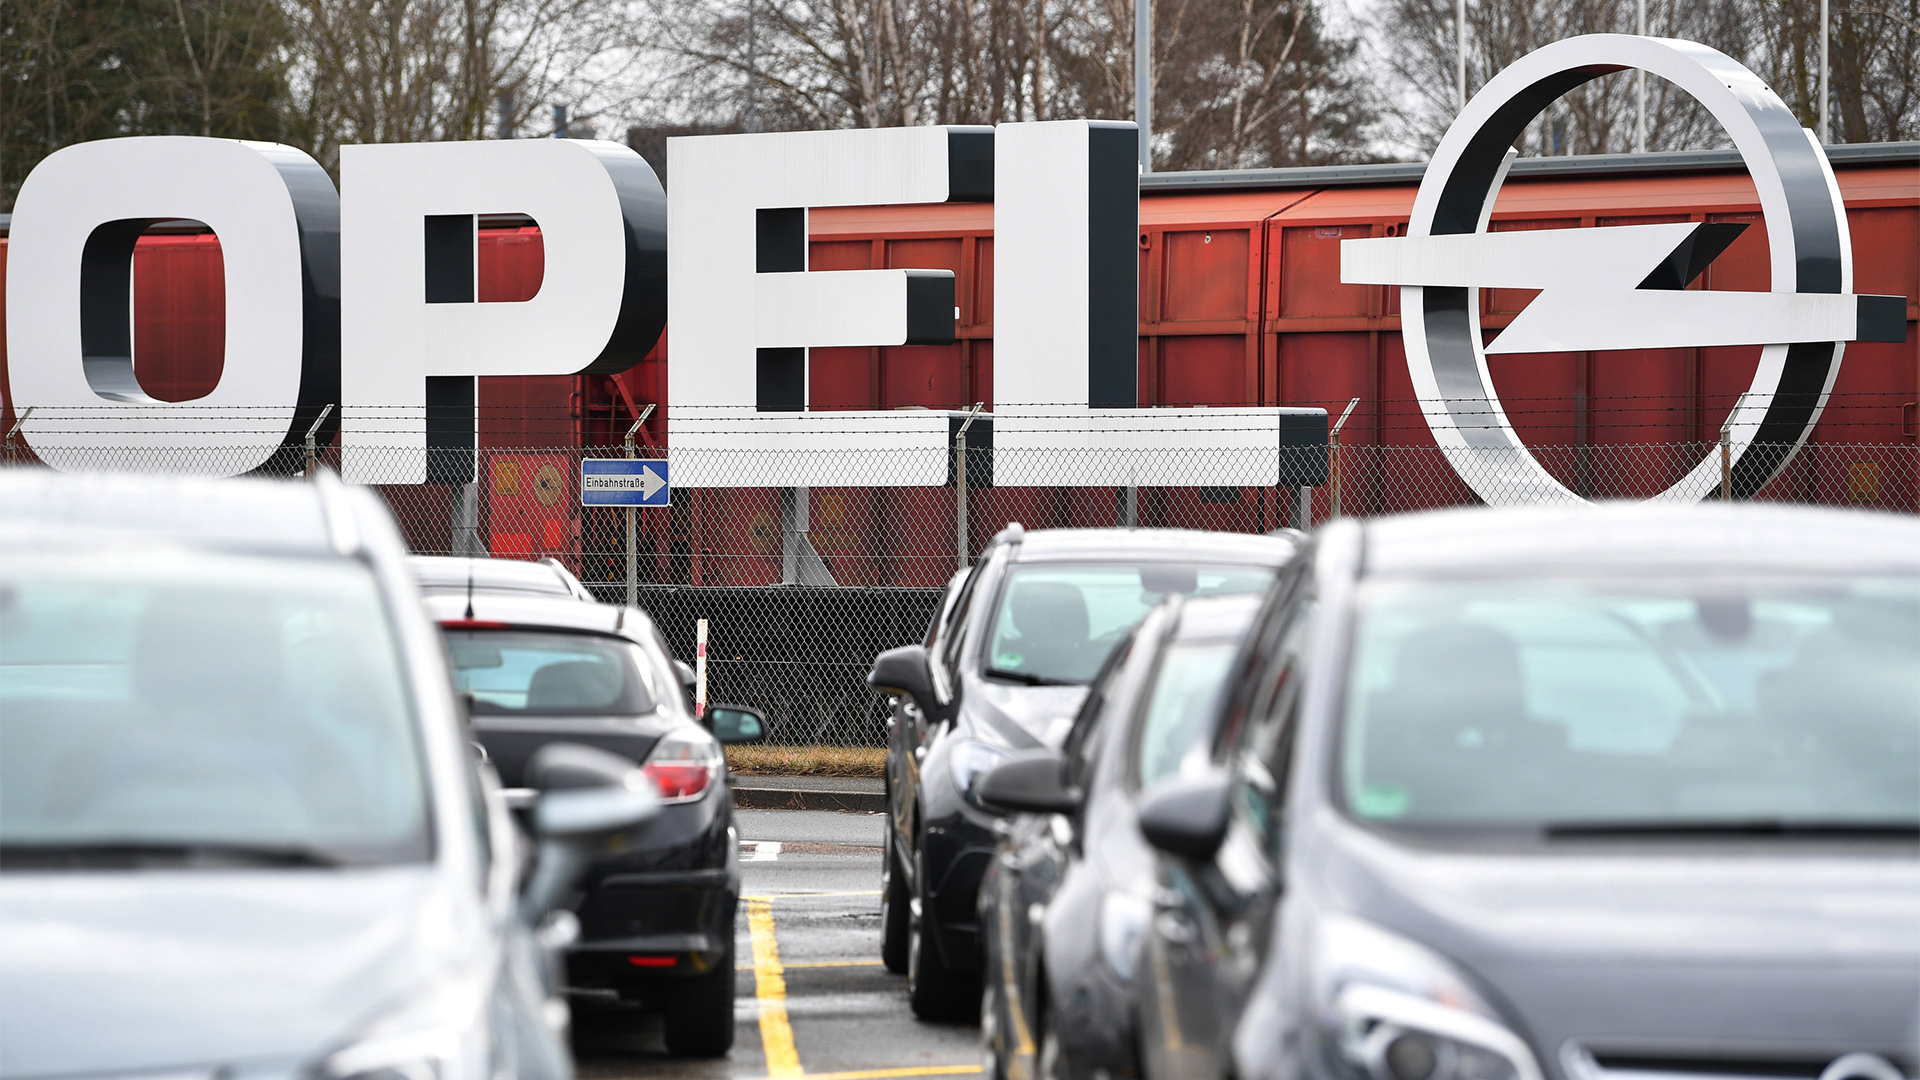 Opelwerk in Kaiserslautern | Bildquelle: dpa